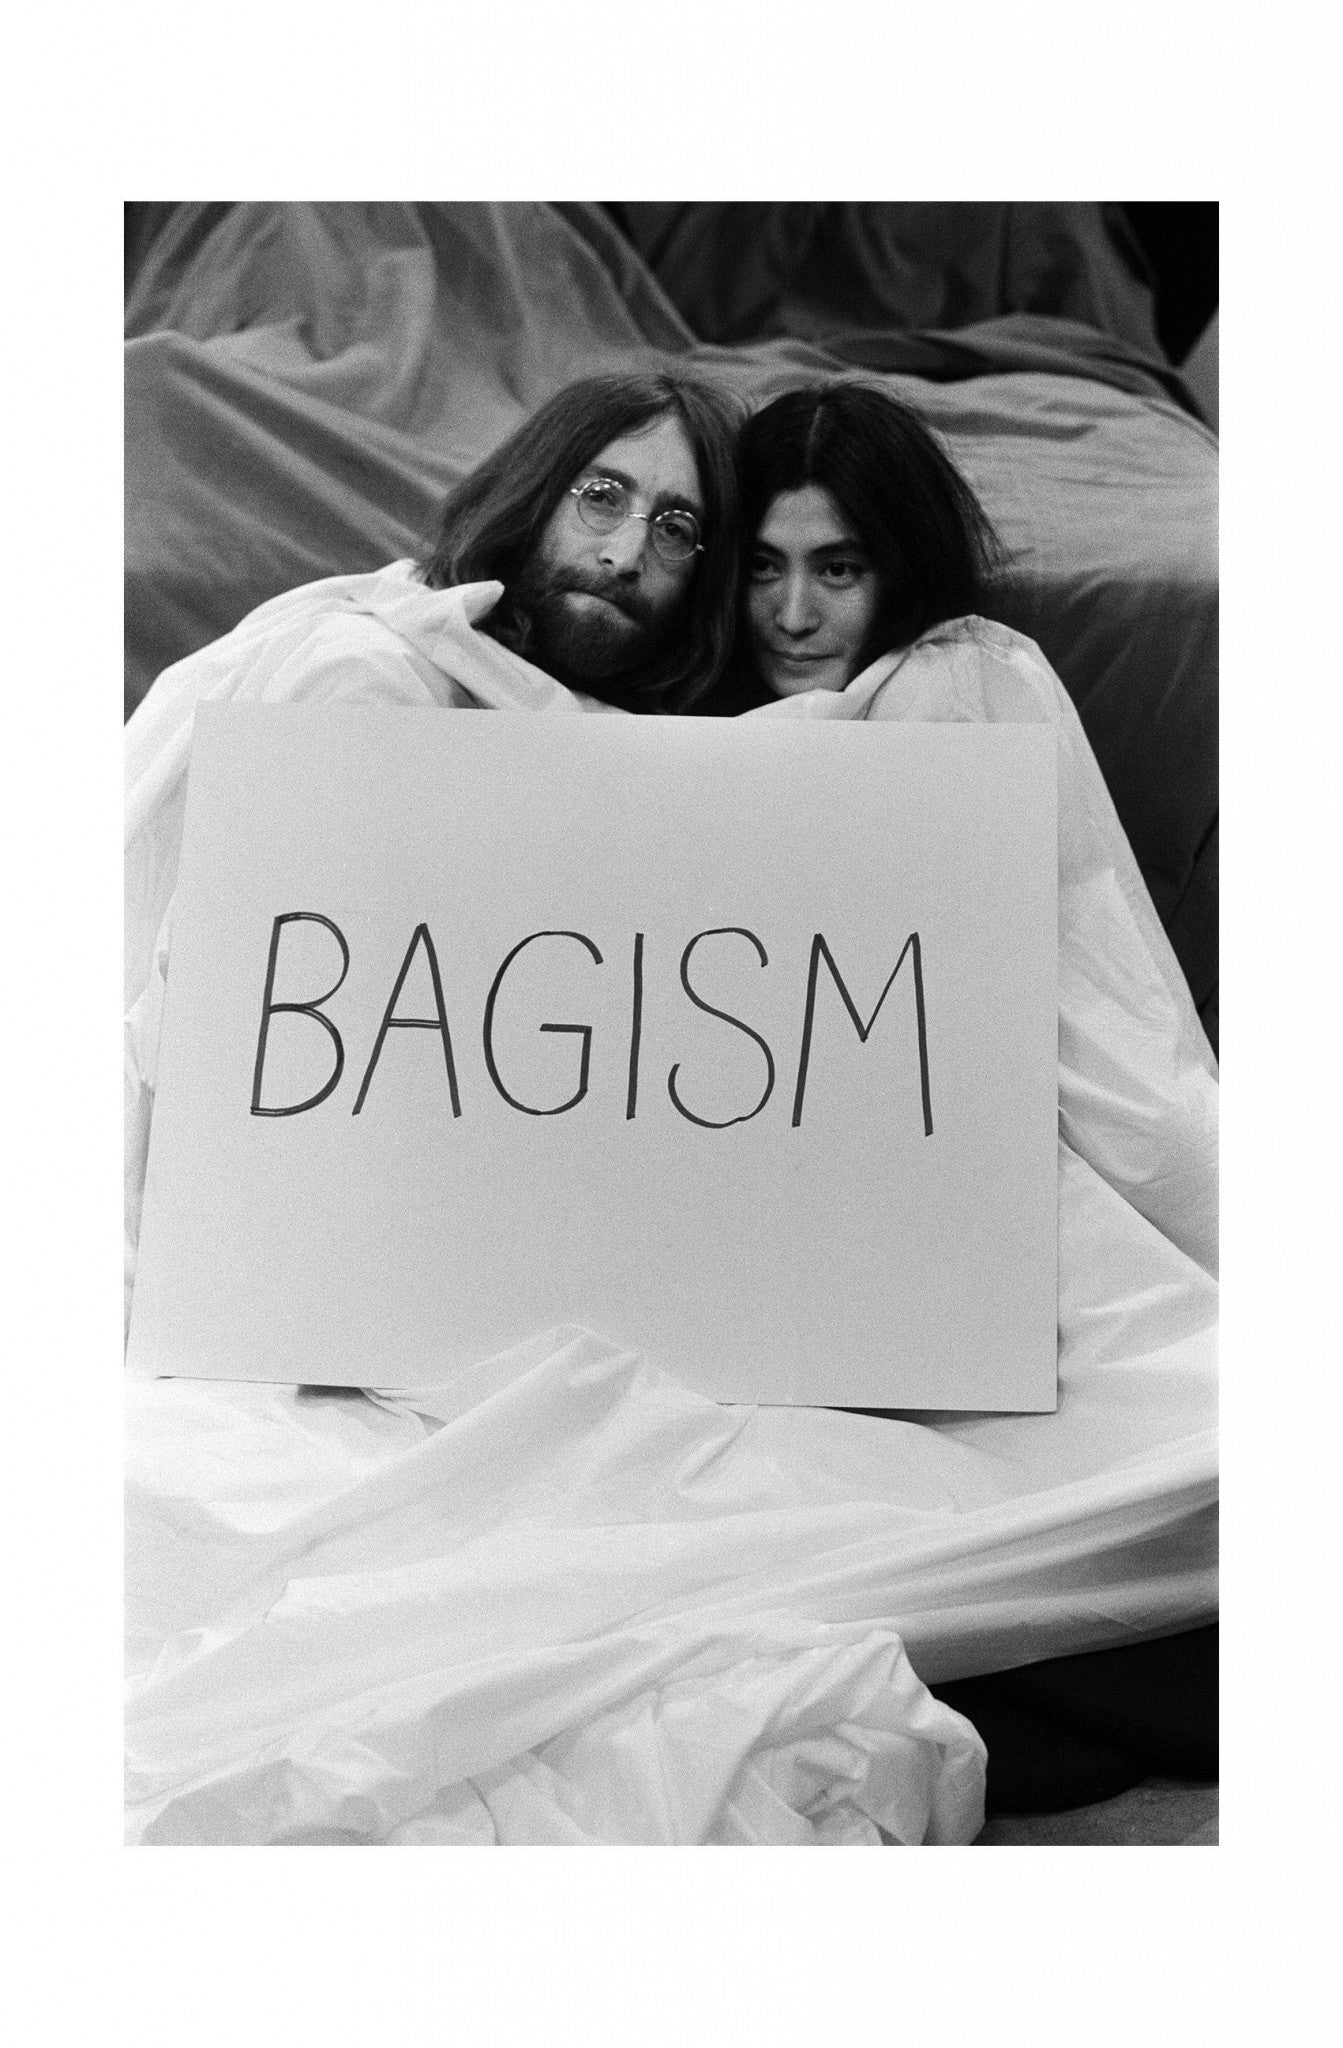 John Lennon - BAGISM! With Yoko Ono in Bed, England 1969 Print 1